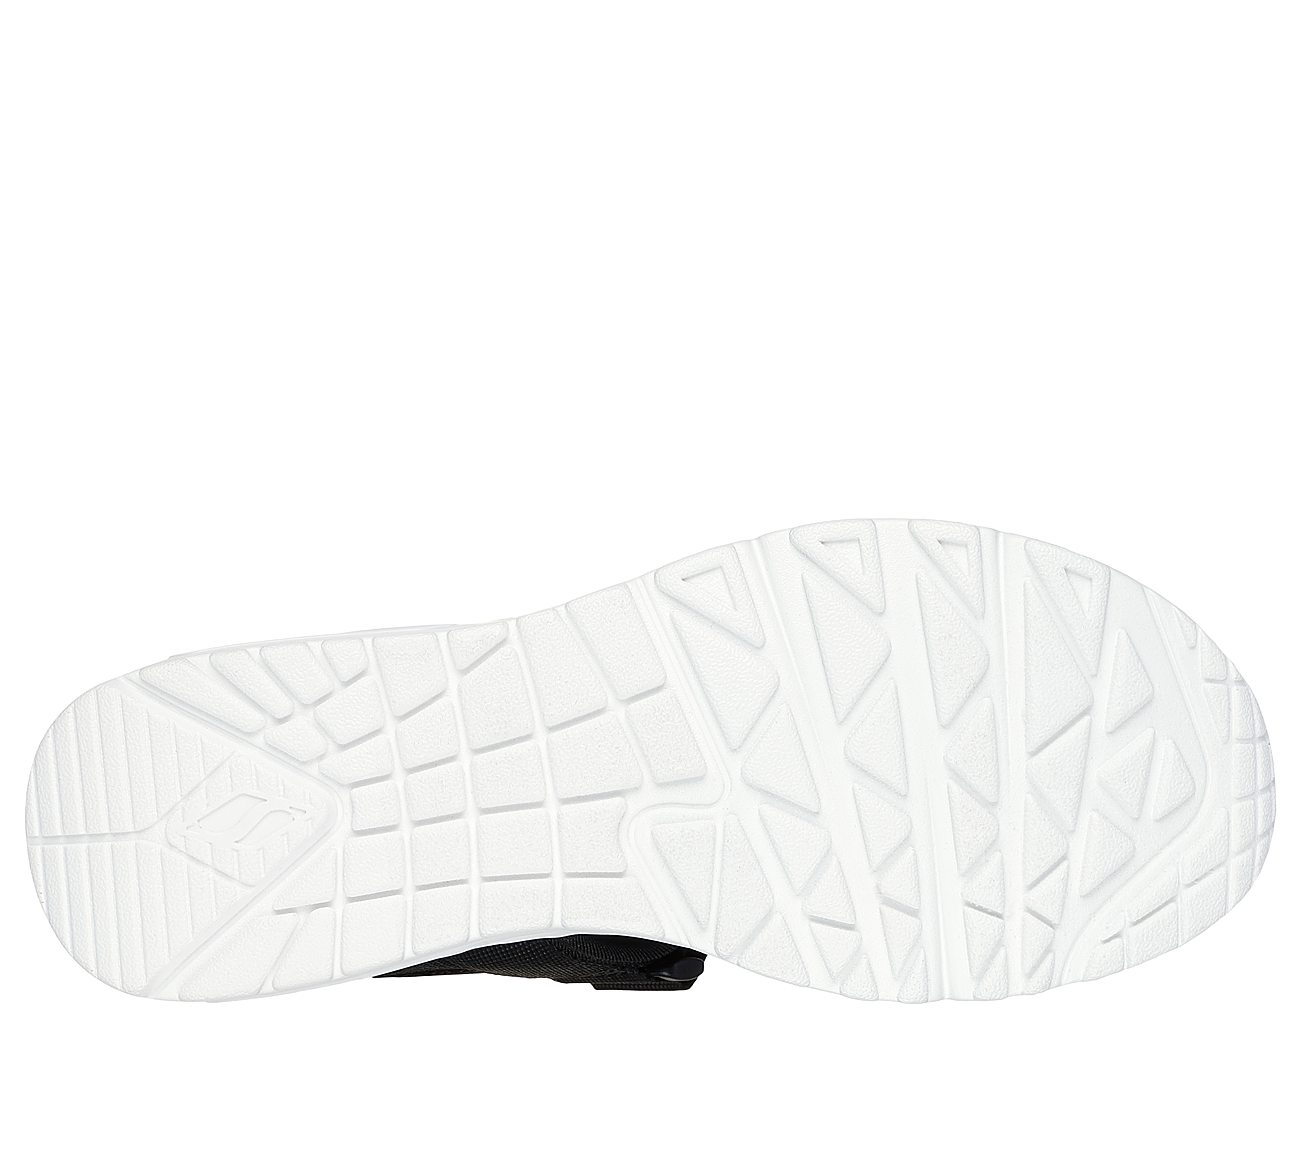 UNO - NEW SESH, BLACK/WHITE Footwear Bottom View